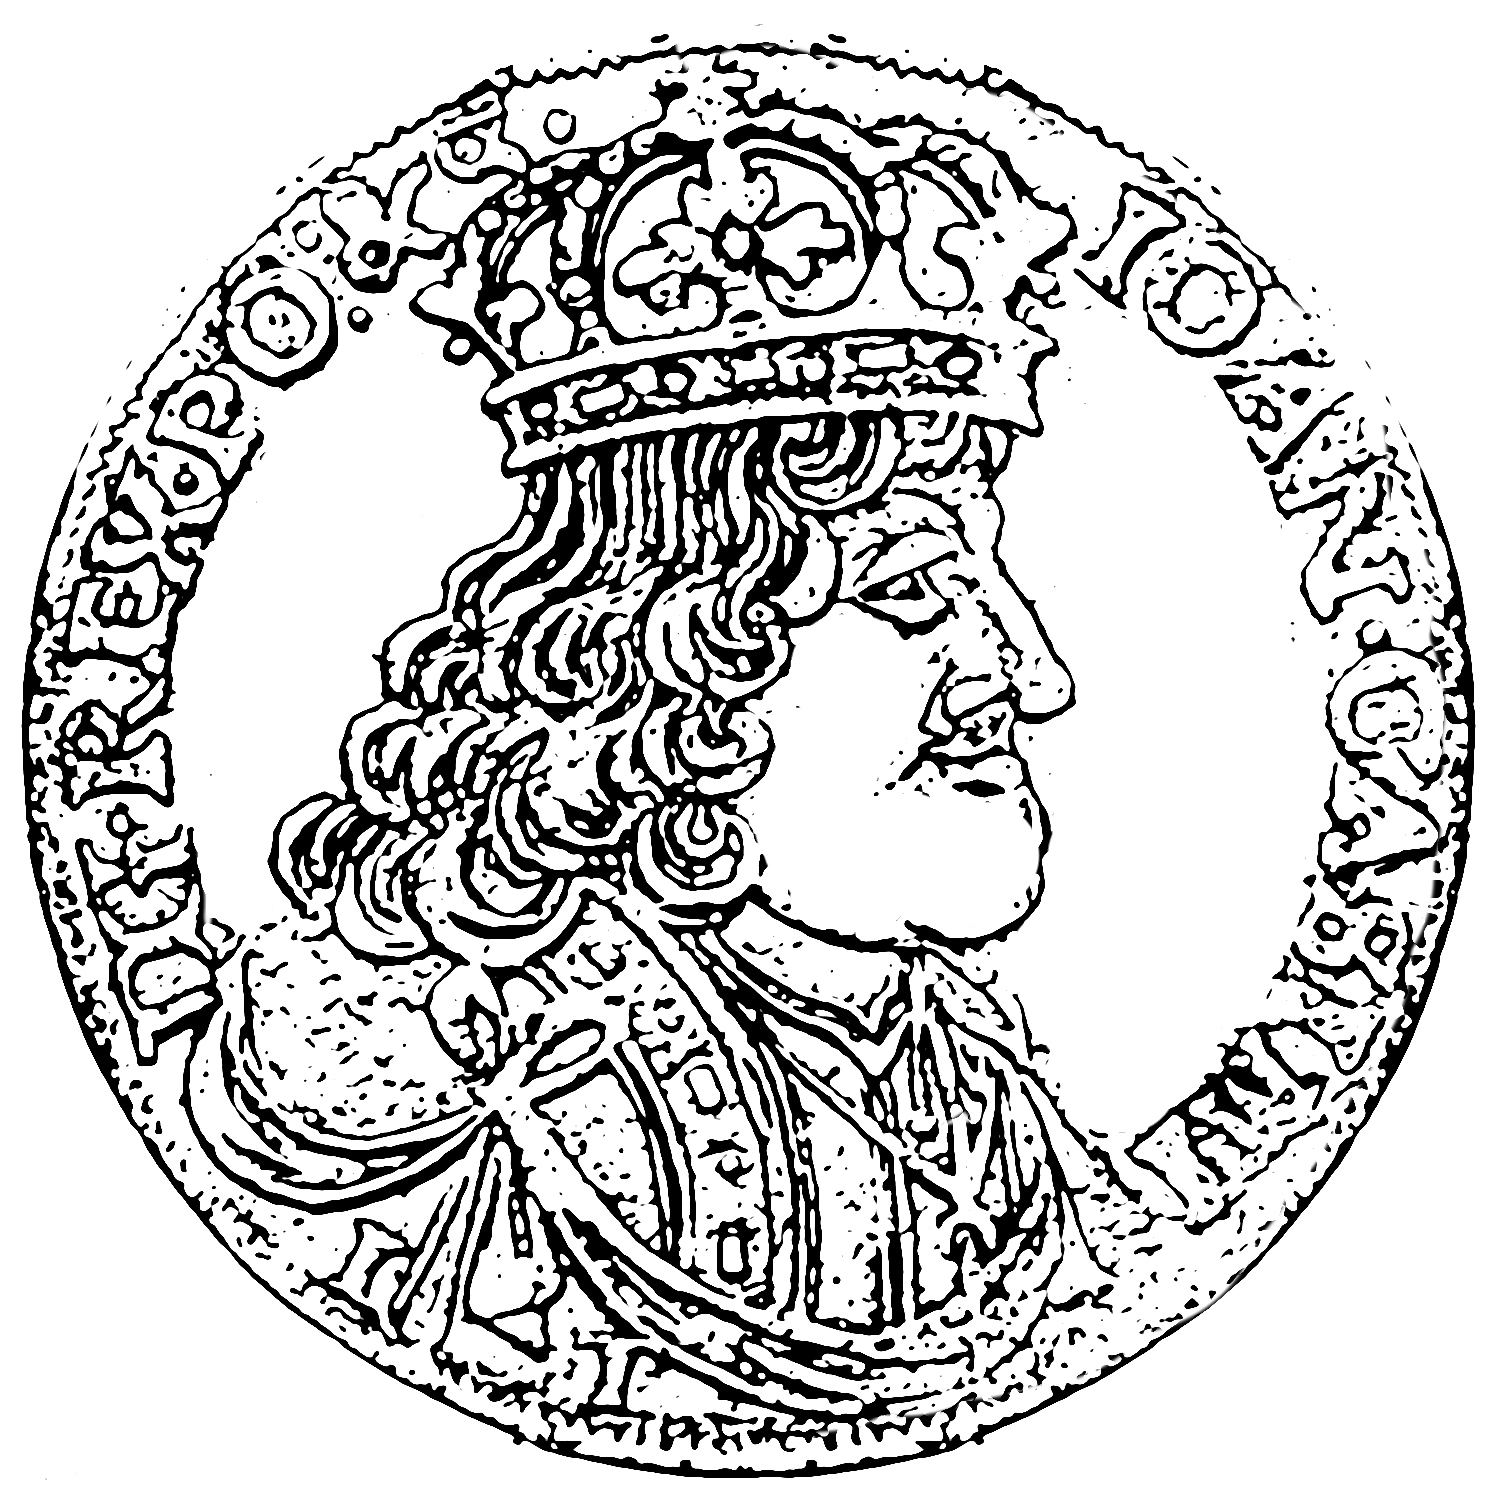 John Casimir Vasa